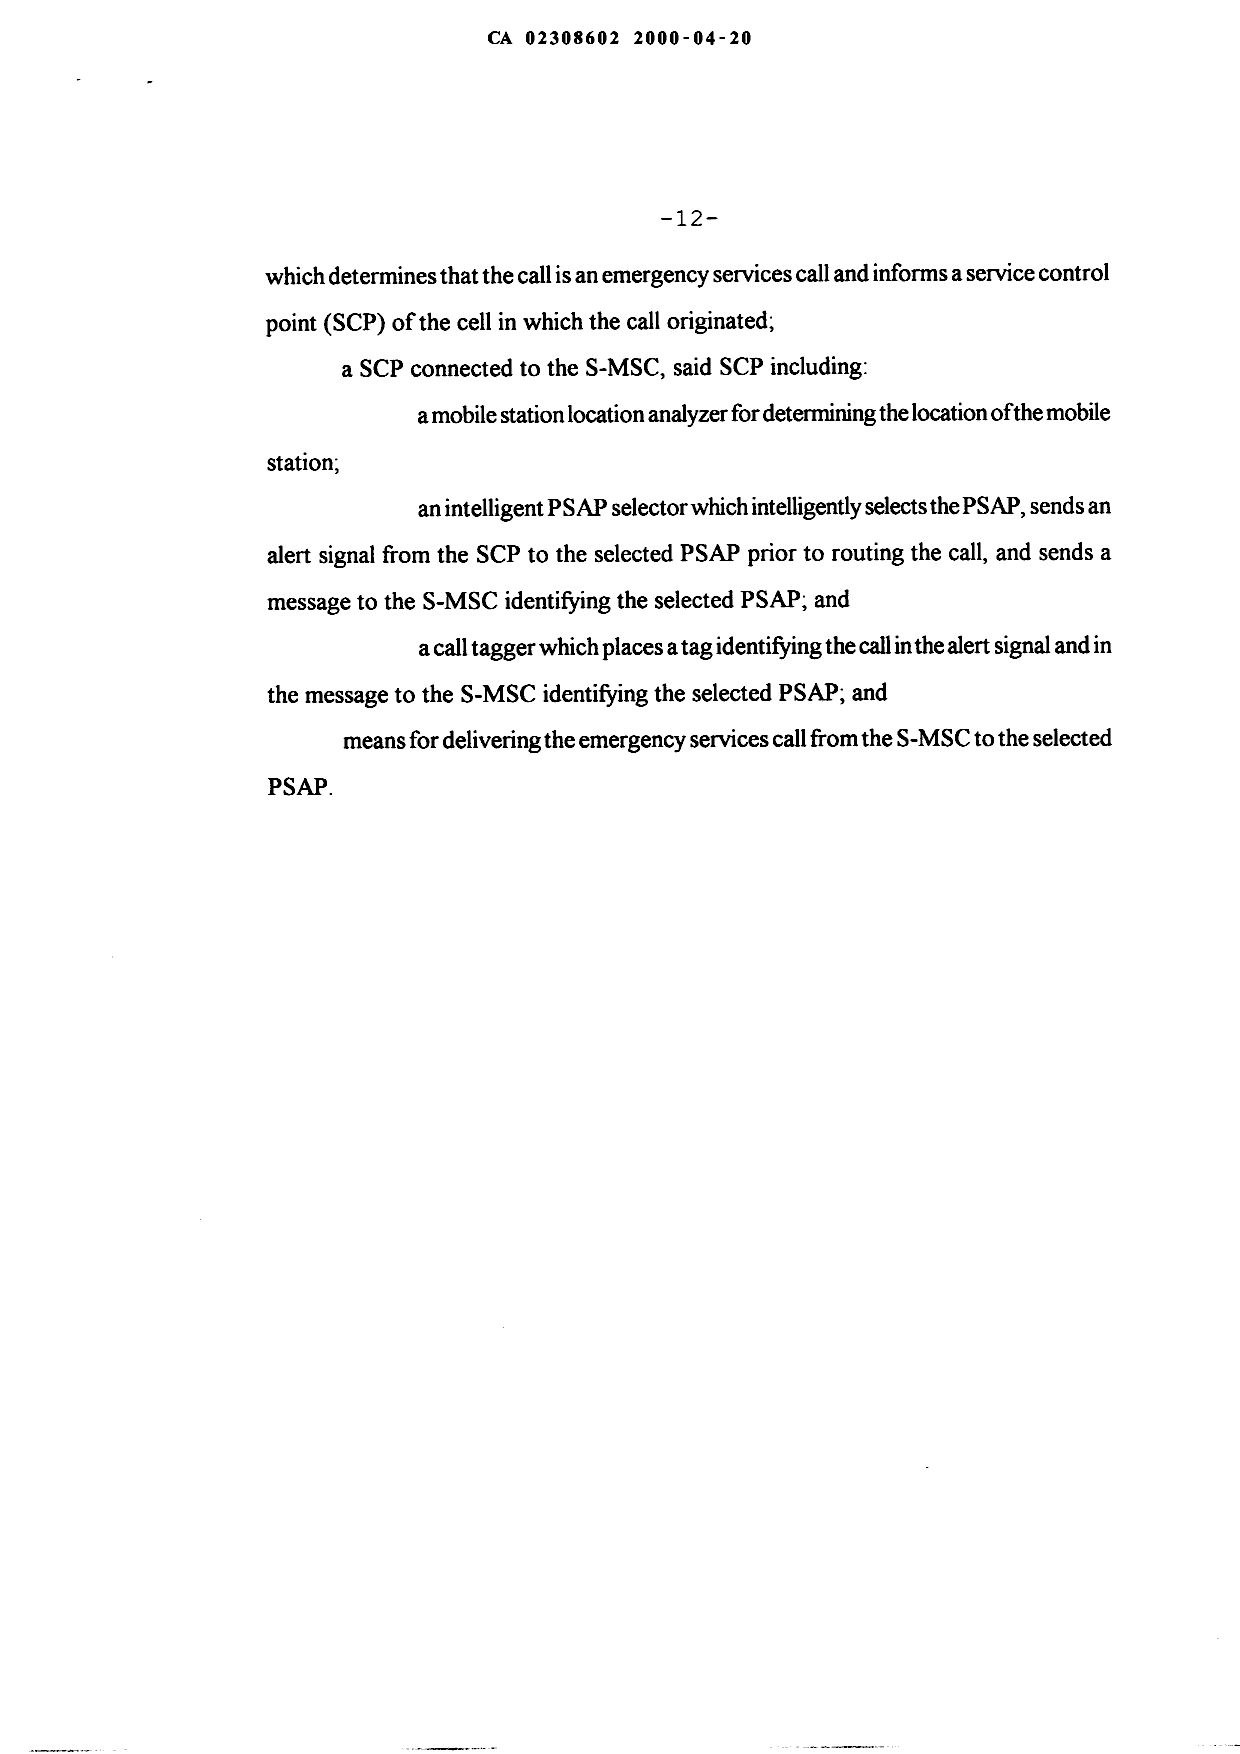 Canadian Patent Document 2308602. Prosecution-Amendment 19991220. Image 7 of 7